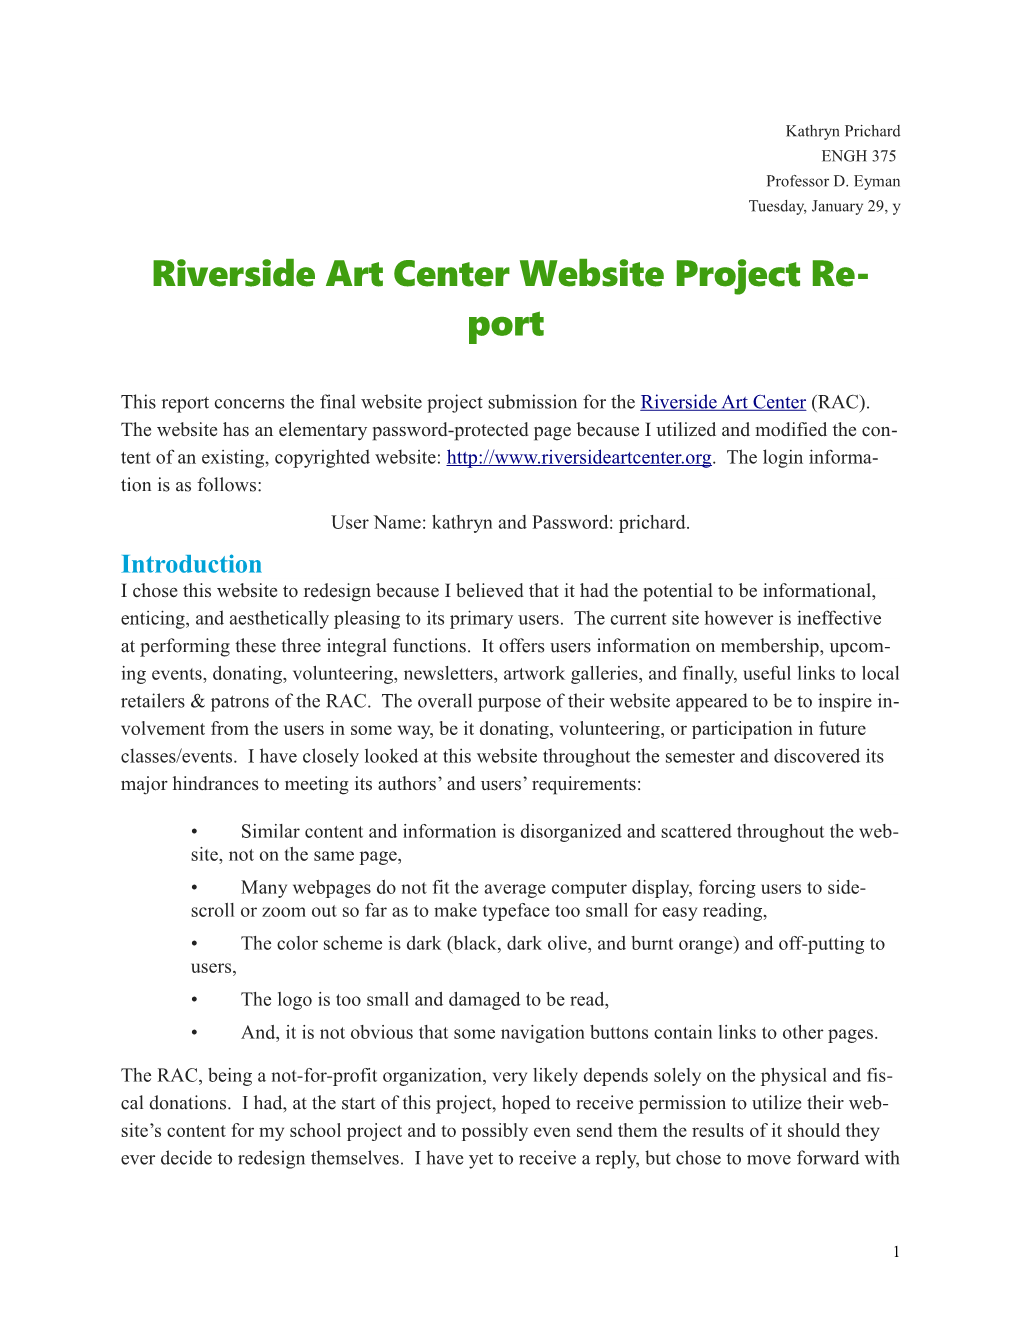 Riverside Art Center Website Project Report